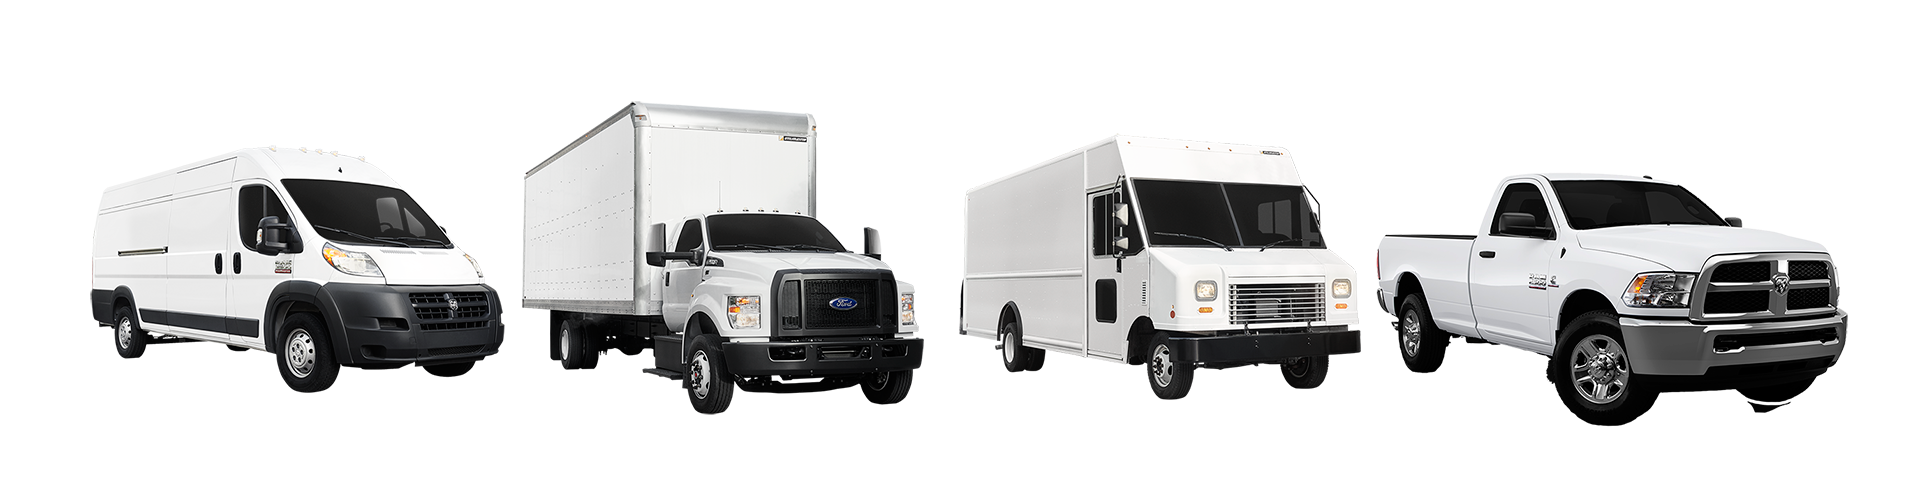 Mobile Retail Vehicles - Utilimaster - A Shyft Group Brand